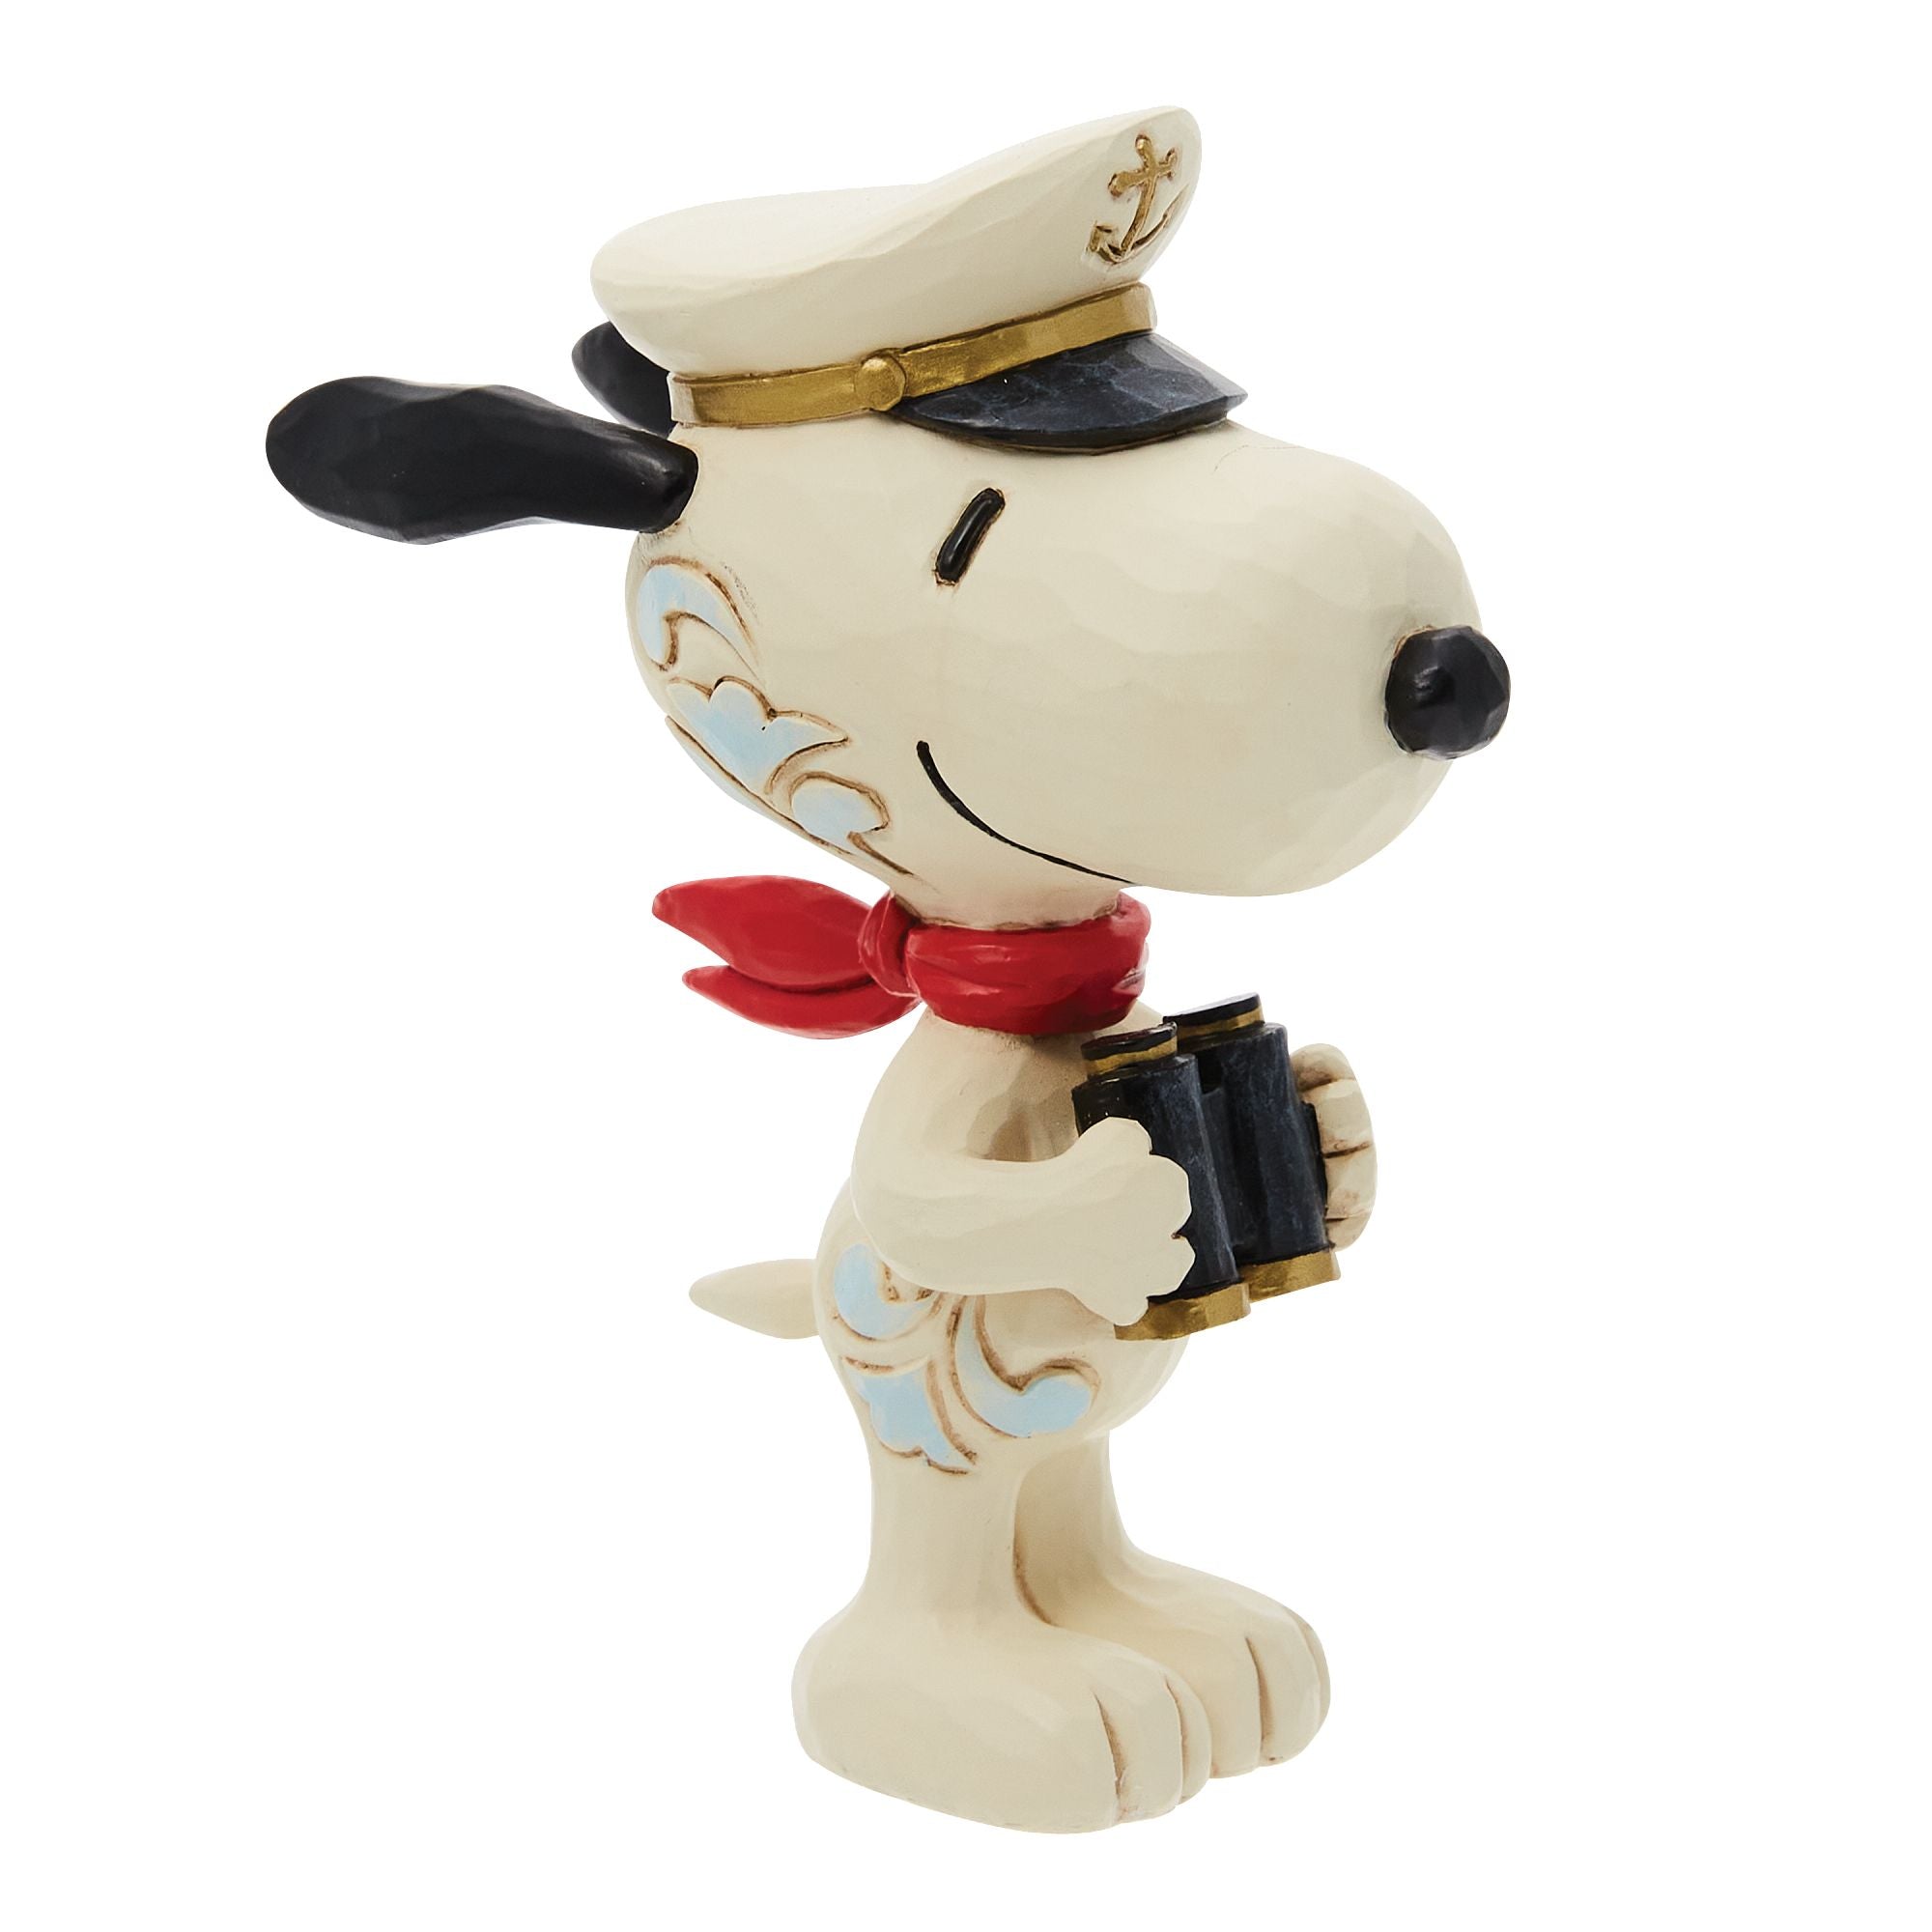 Snoopy Sailor Captain Mini